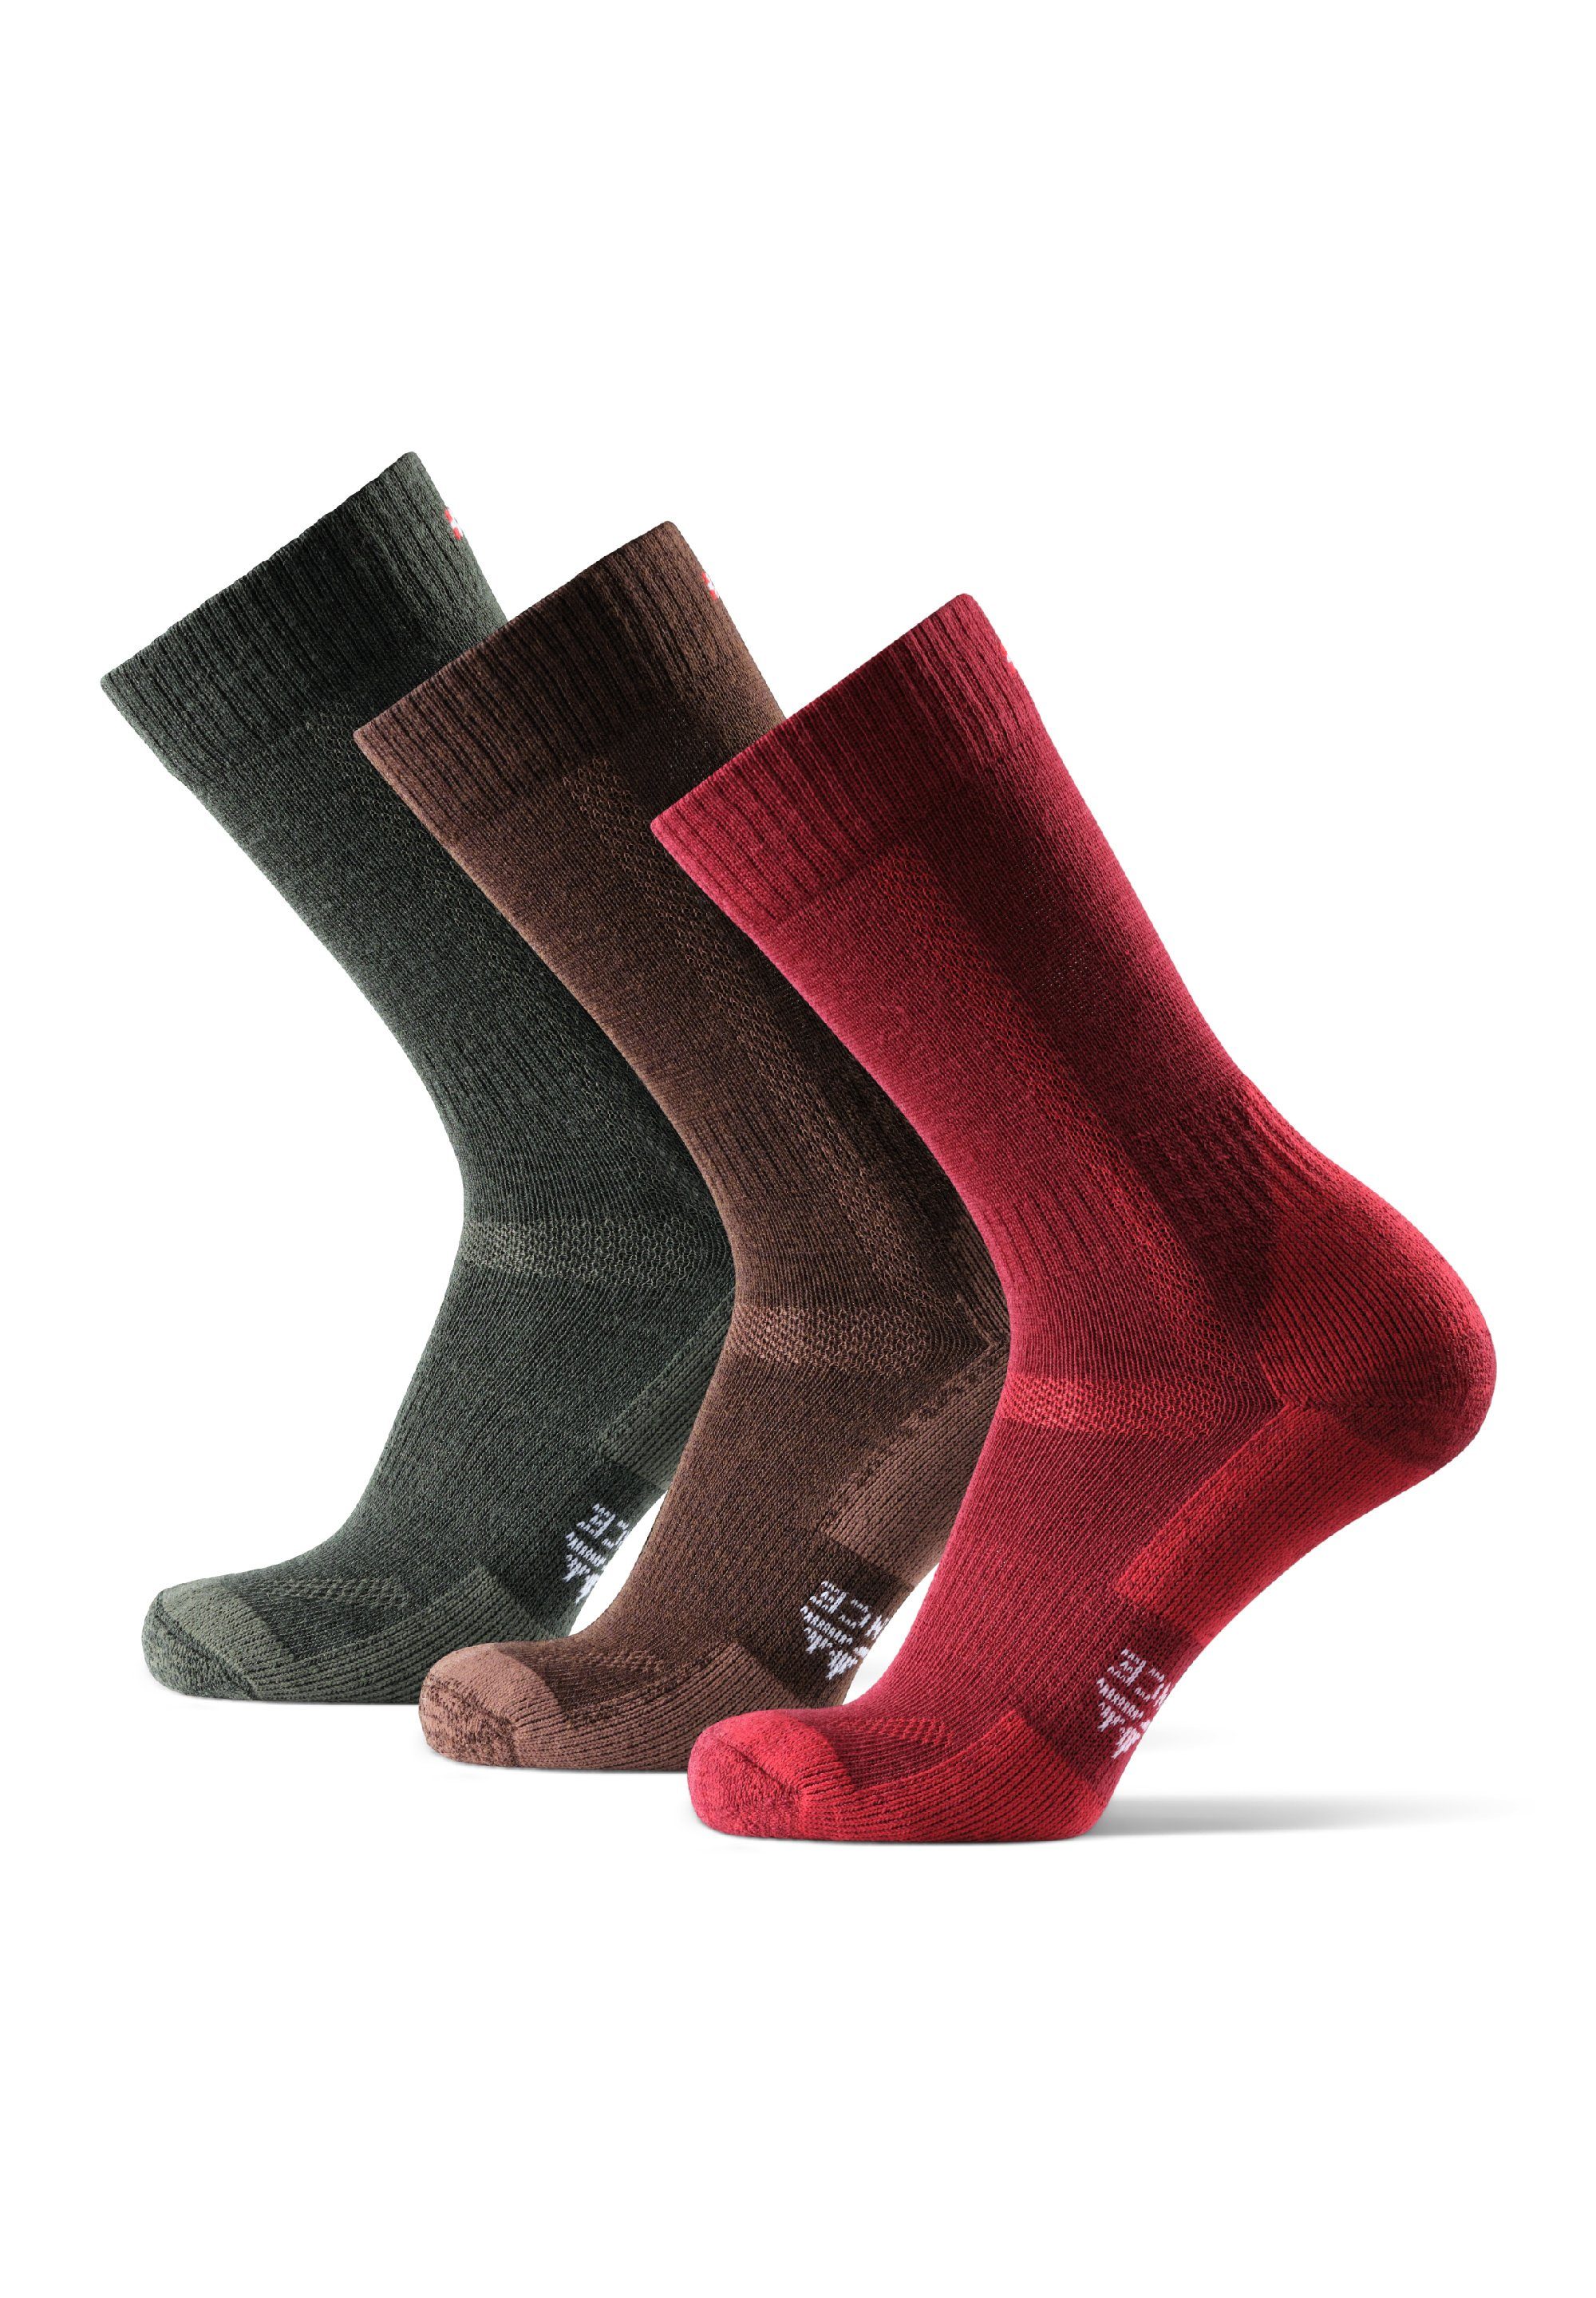 DANISH ENDURANCE Wandersocken Merino für Kinder 3-Paar) Socks Classic (Packung, Multicolor Damen Herren, Hiking & Anti-Blasen